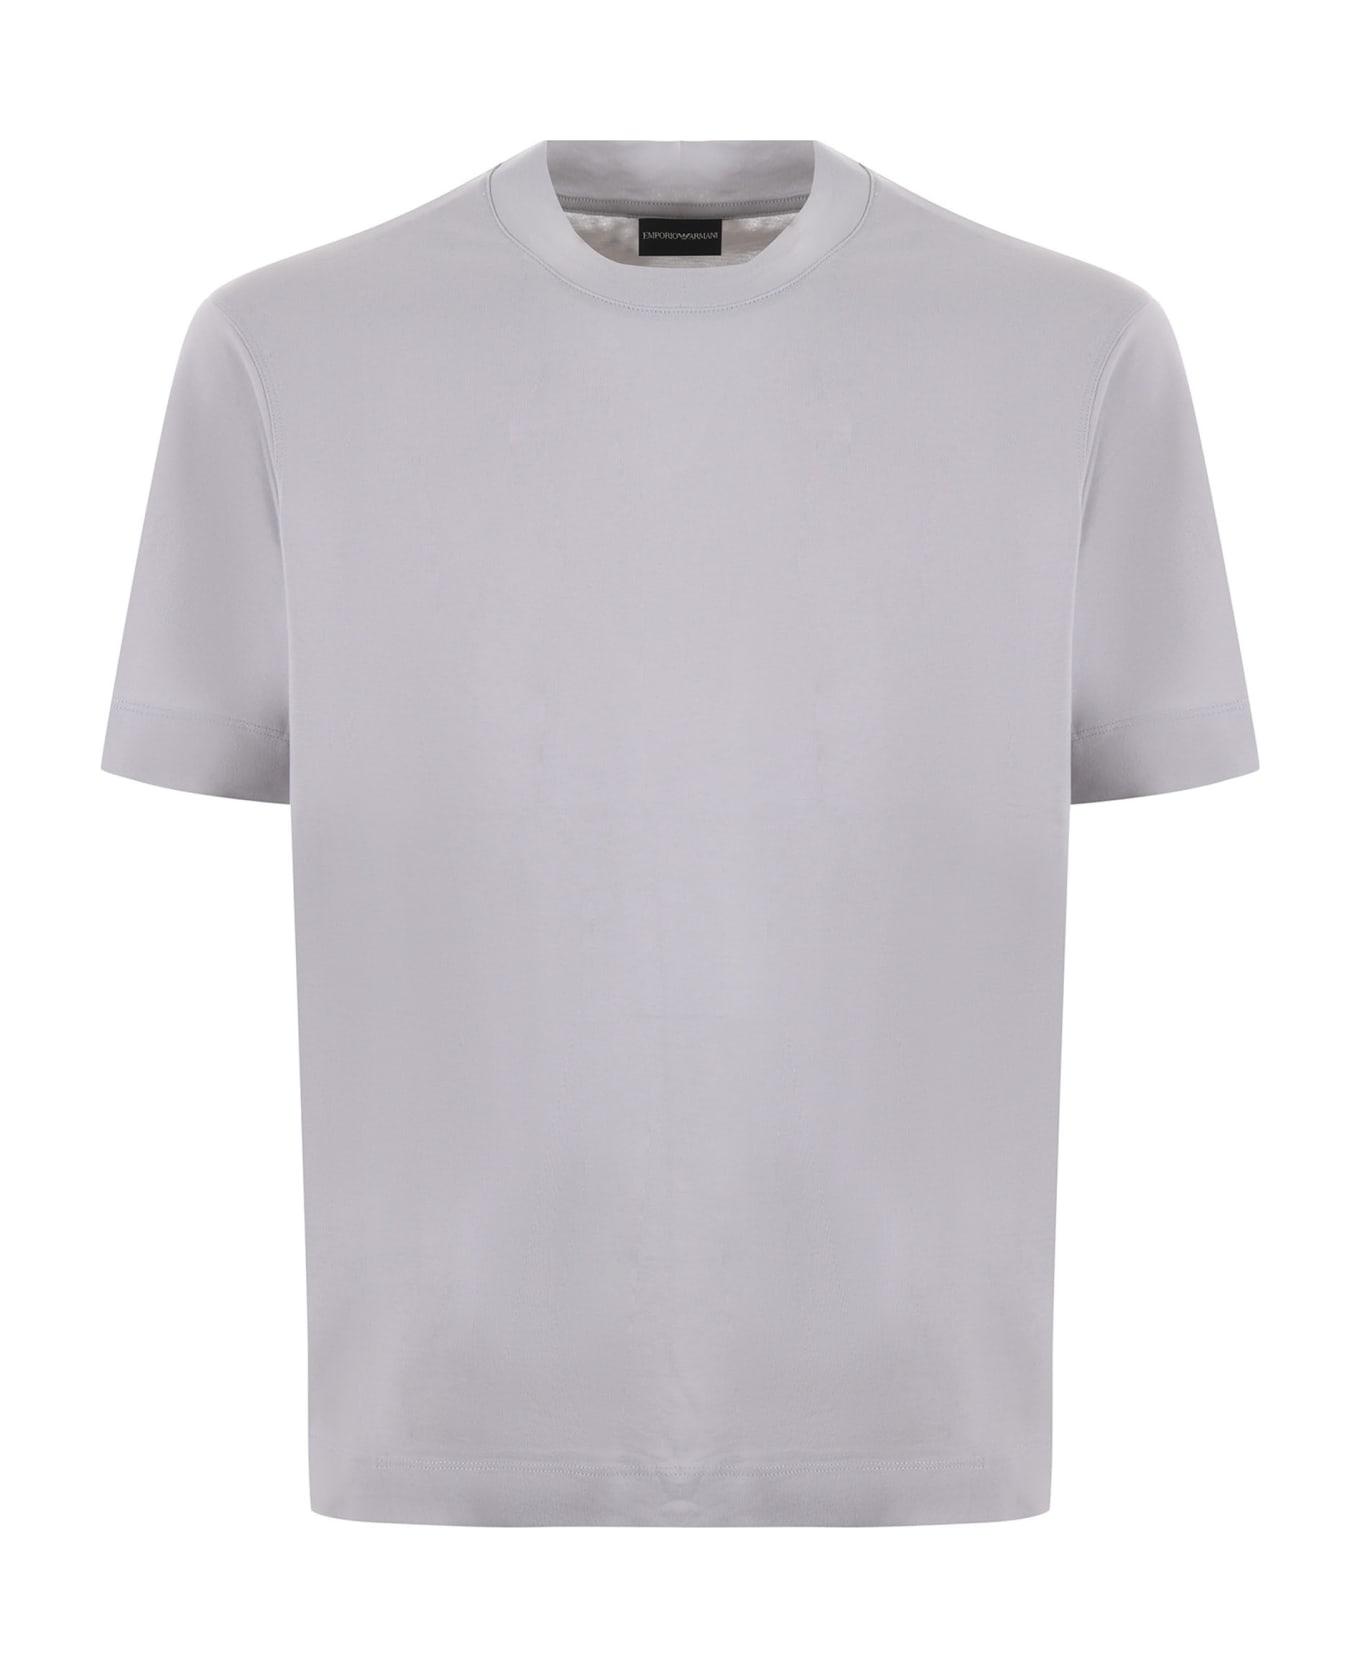 Emporio Armani T-shirt - Grigio perla シャツ